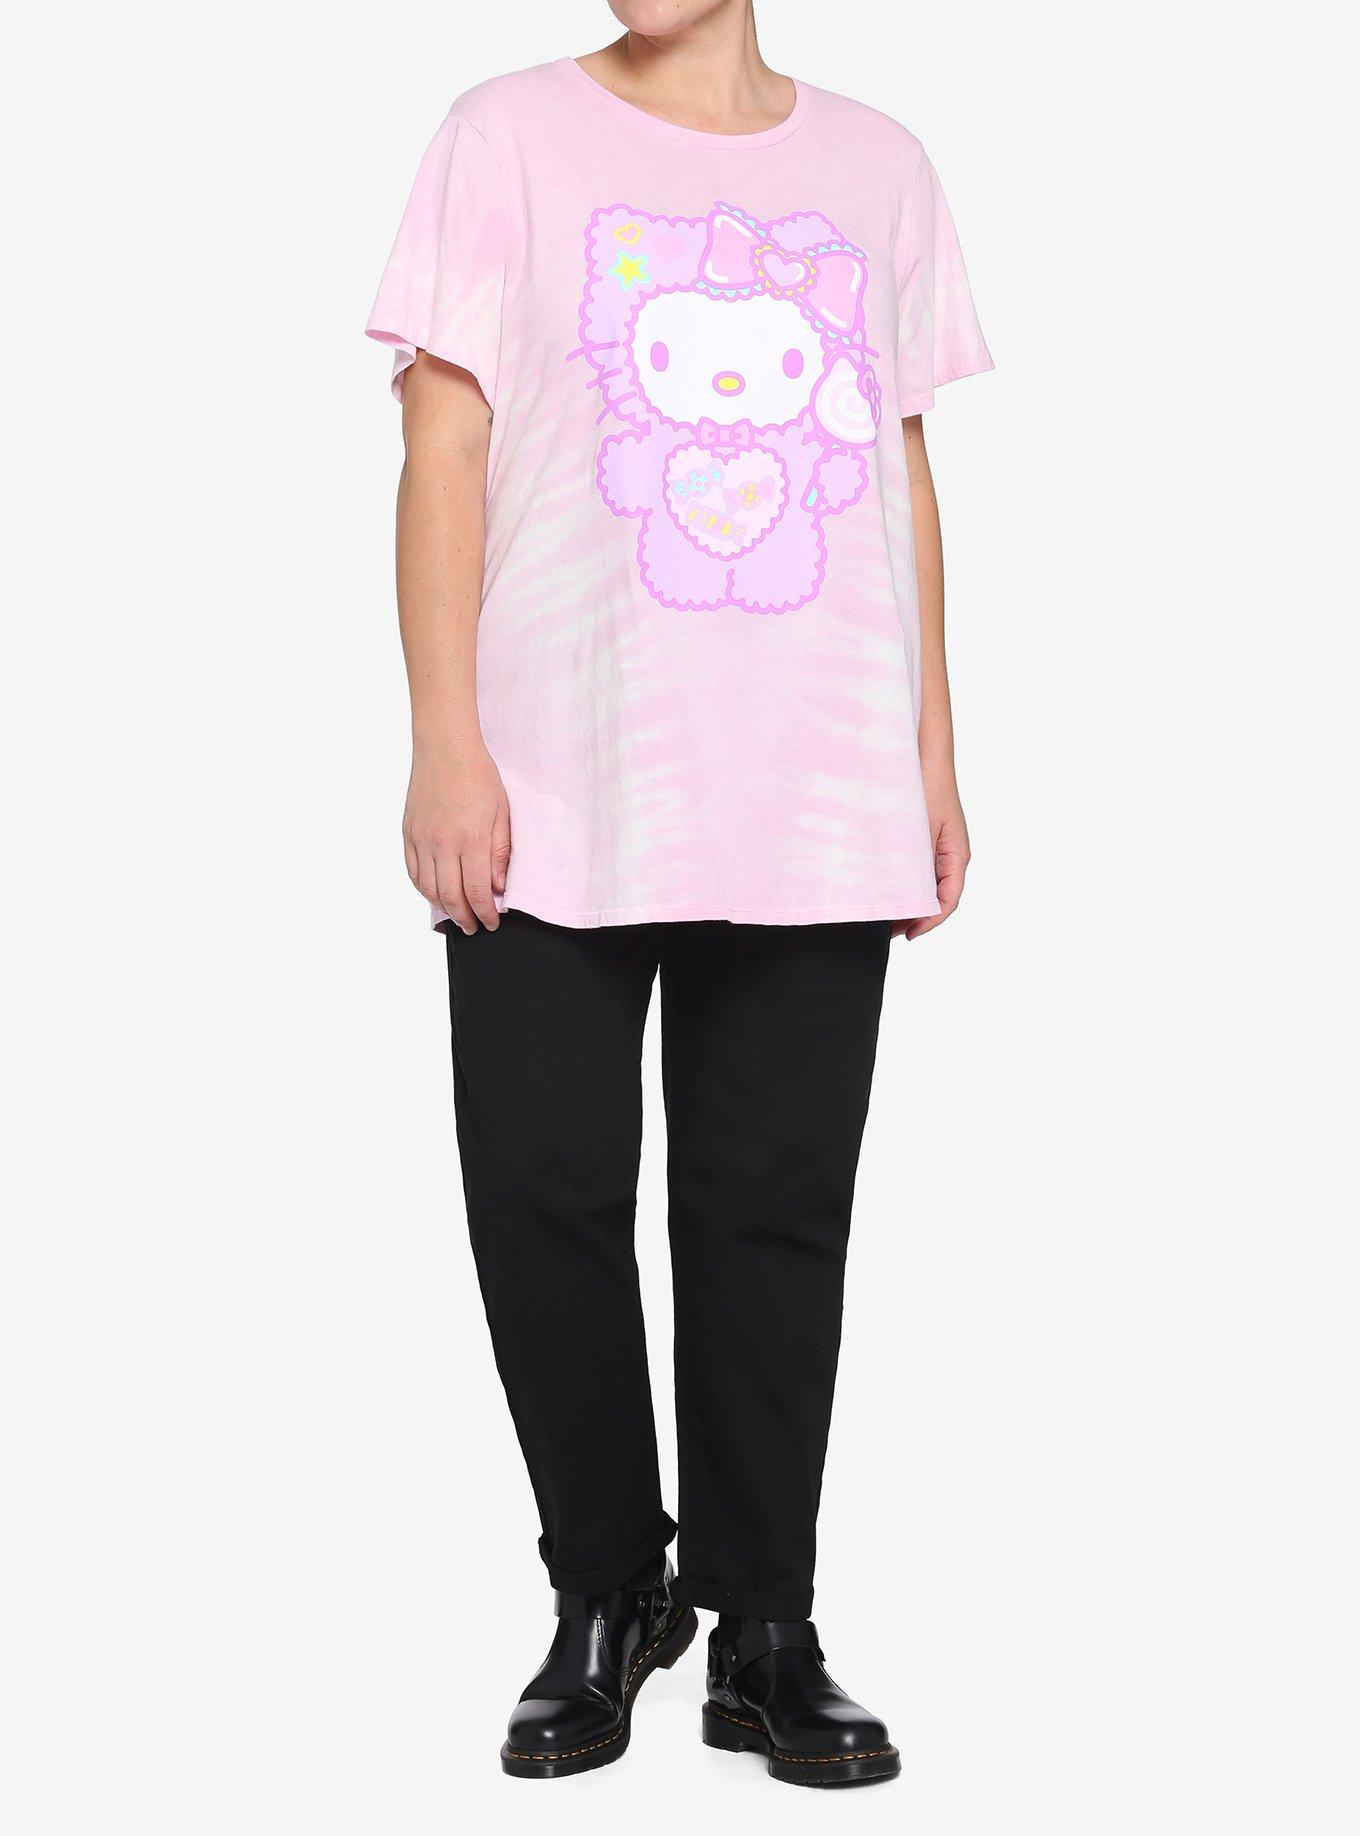 Hello Kitty Monster Boyfriend Fit Girls T-Shirt Plus Size